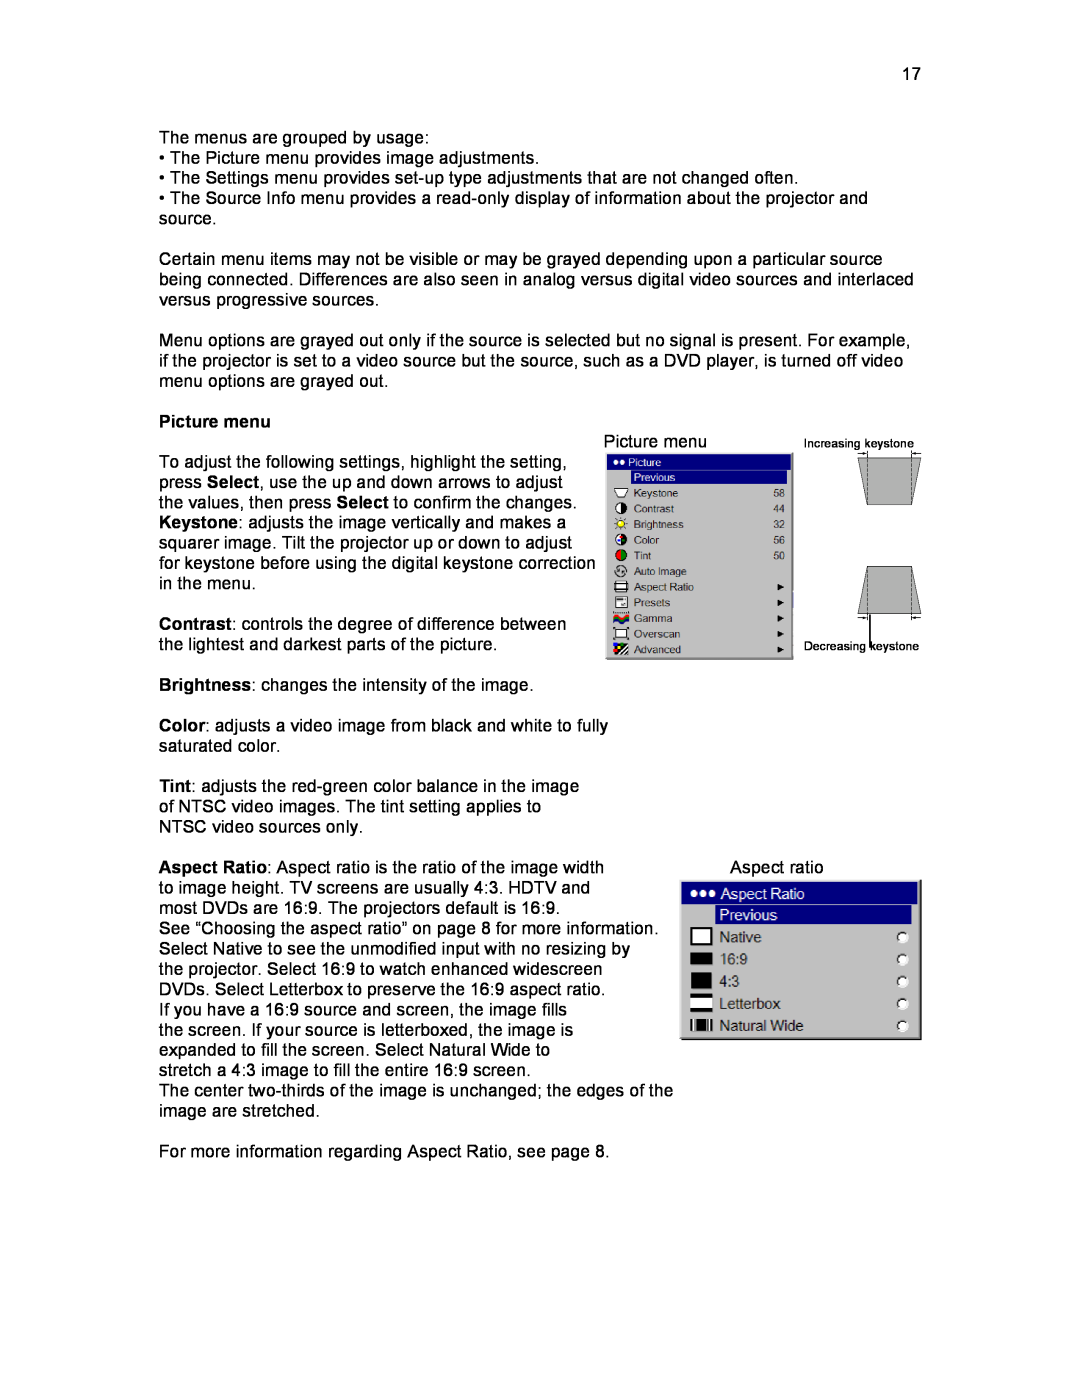 Knoll Systems HD178, HD290, HD108 user manual Picture menu, Increasing keystone, Decreasing 